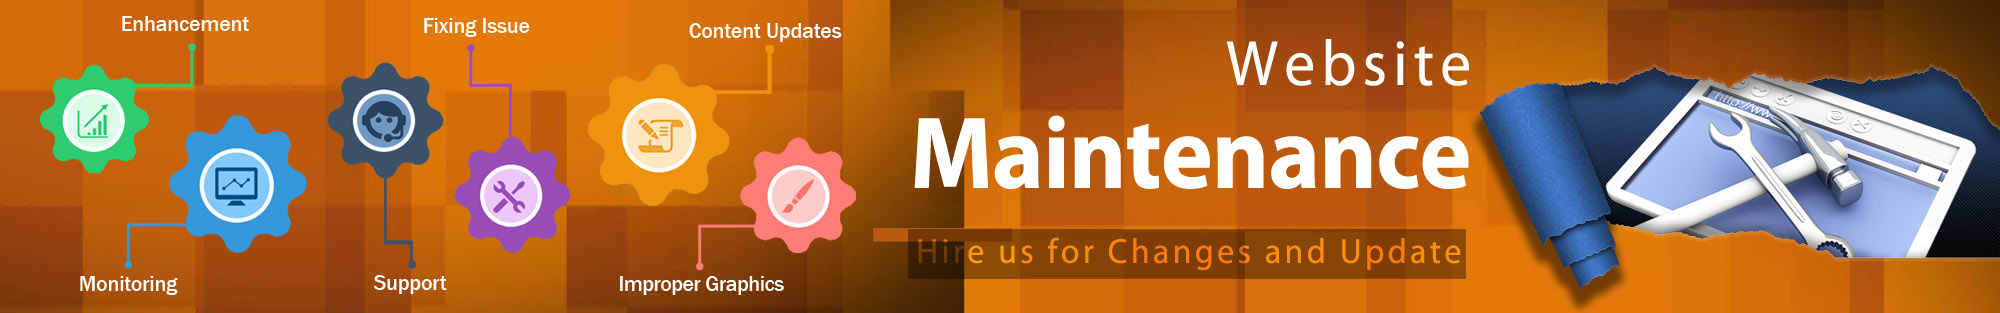 website maintenance services in Mumbai, India